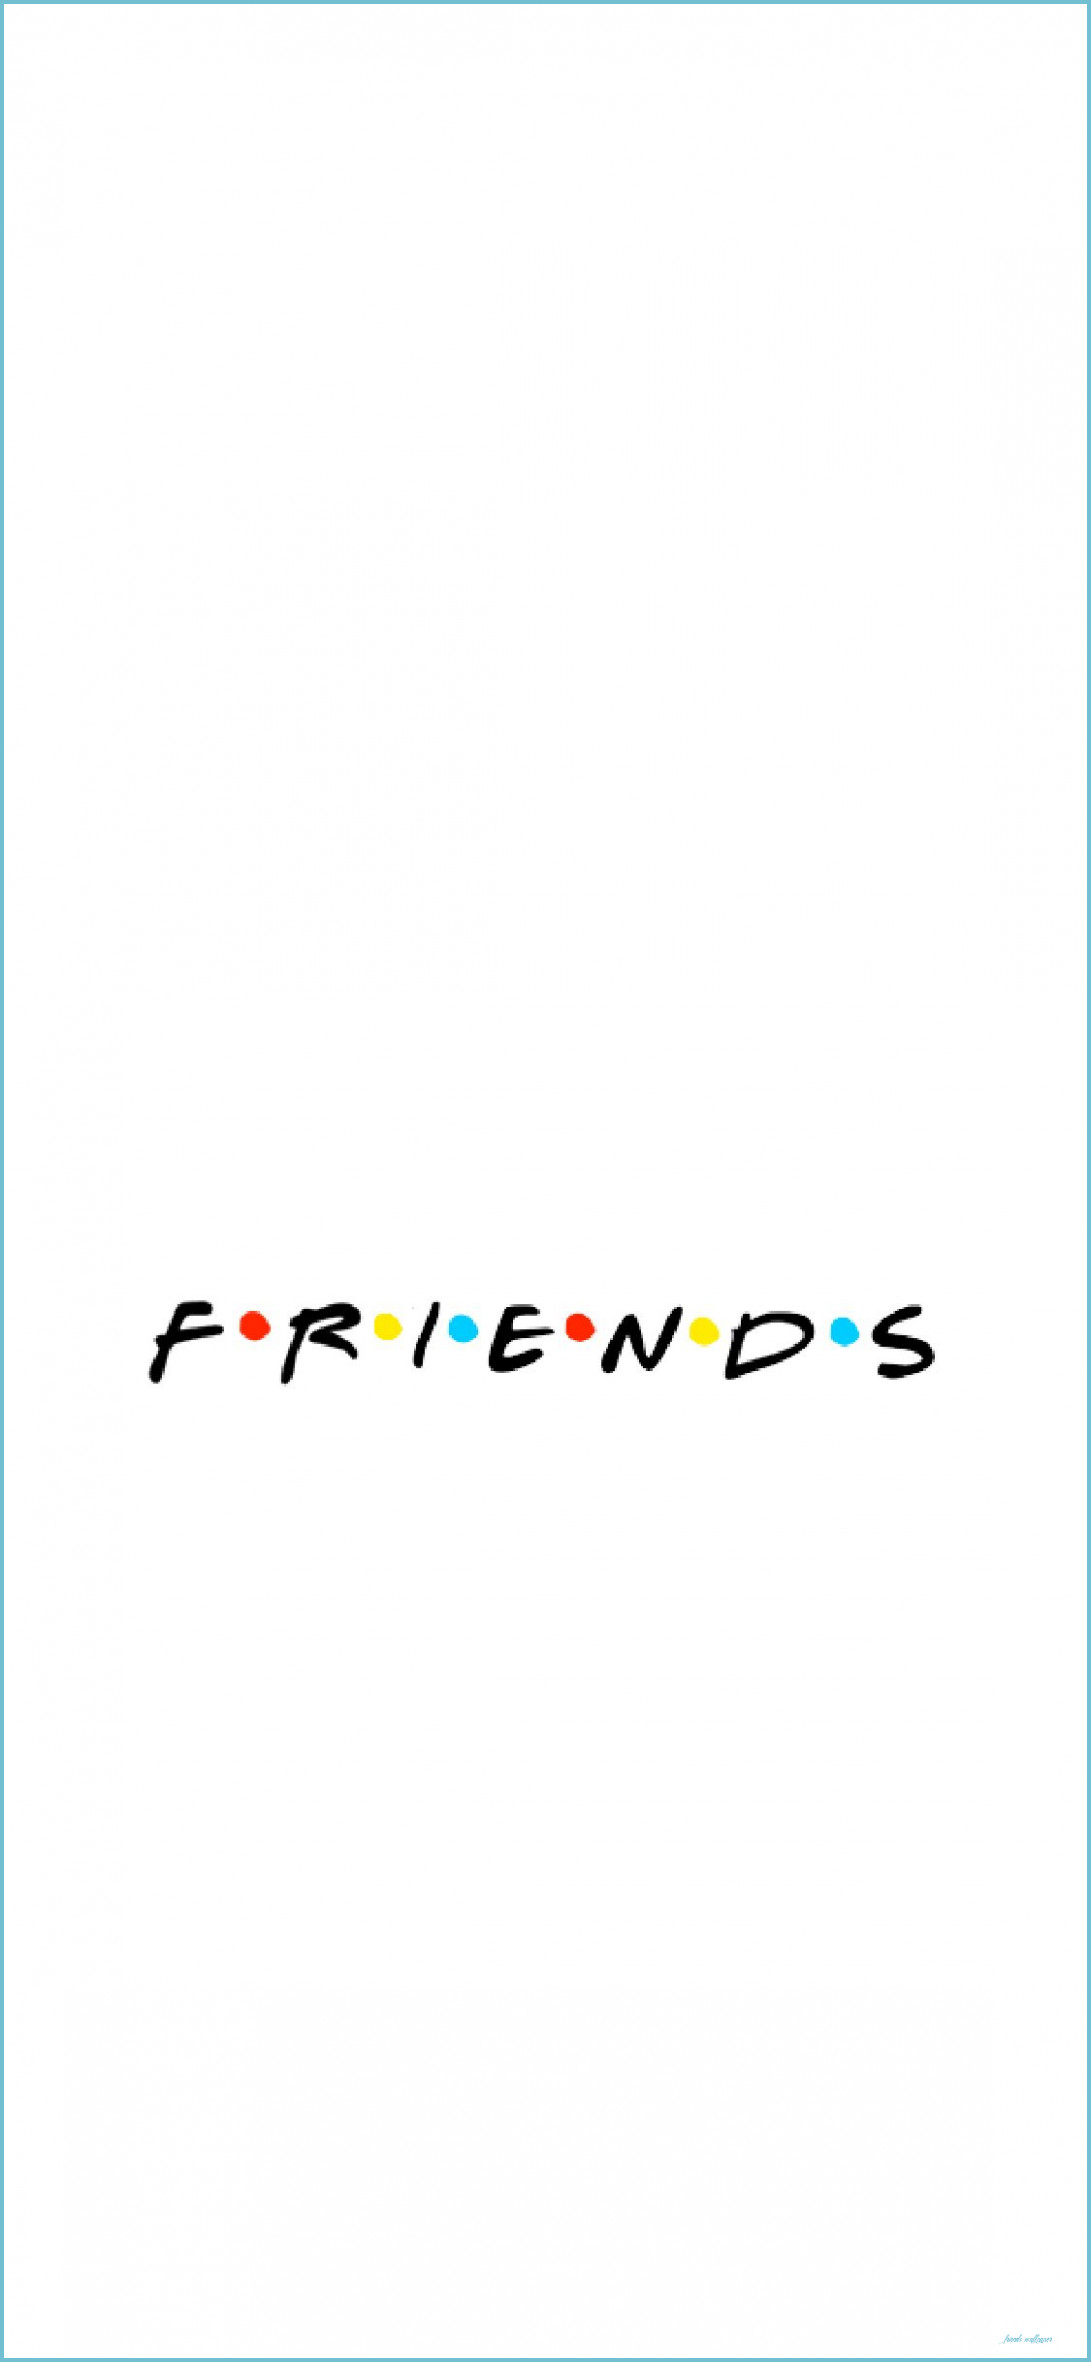 100 Friends Logo Pictures  Wallpaperscom